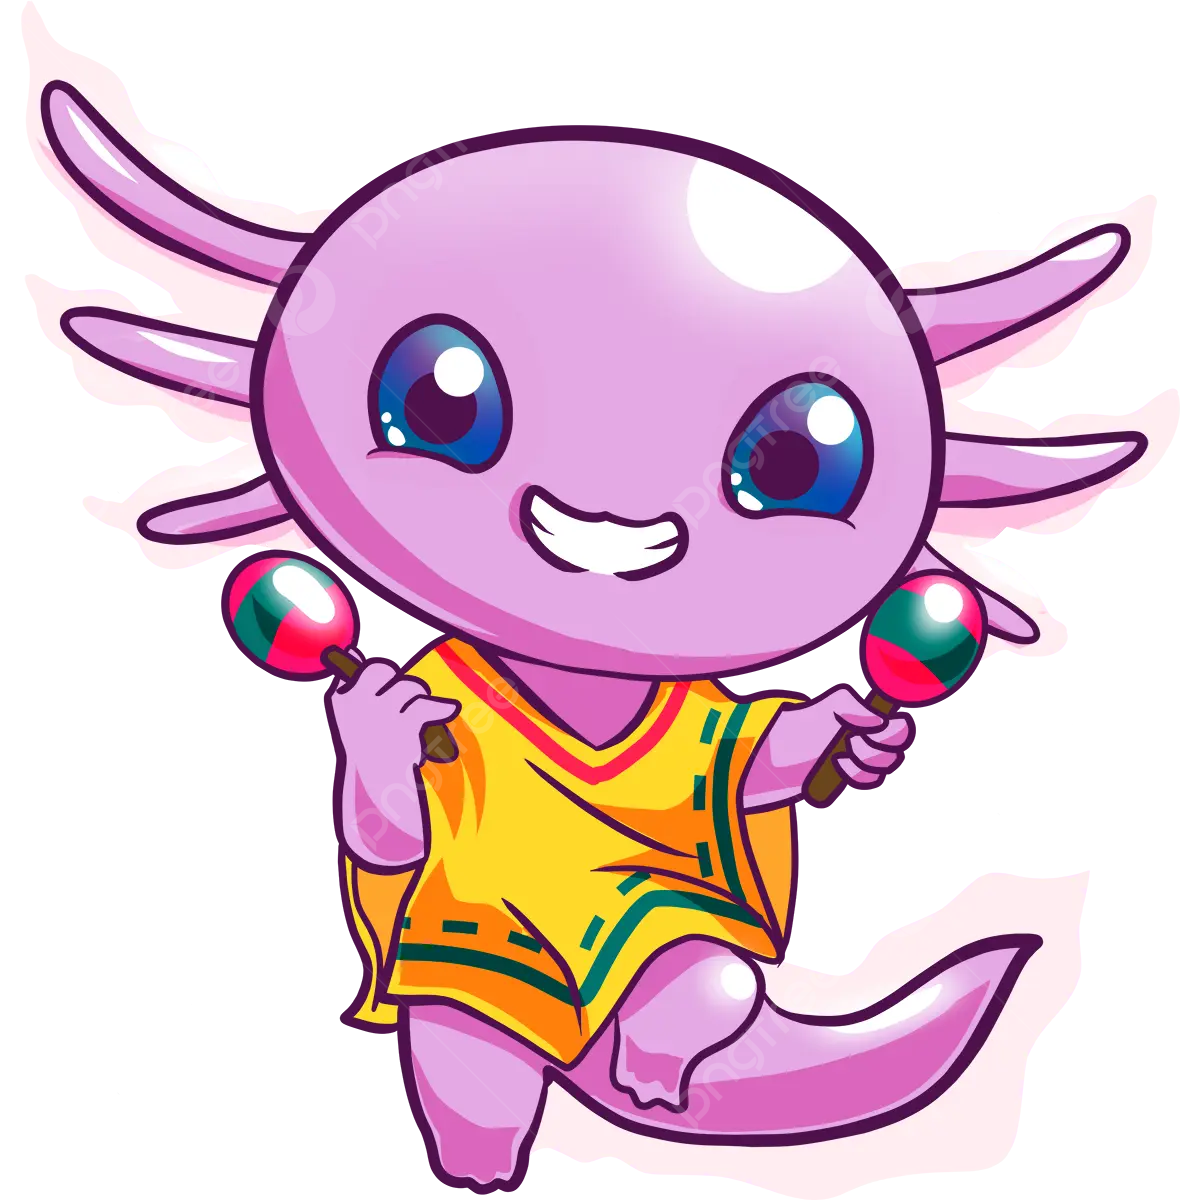 Axolotl PNG Image File